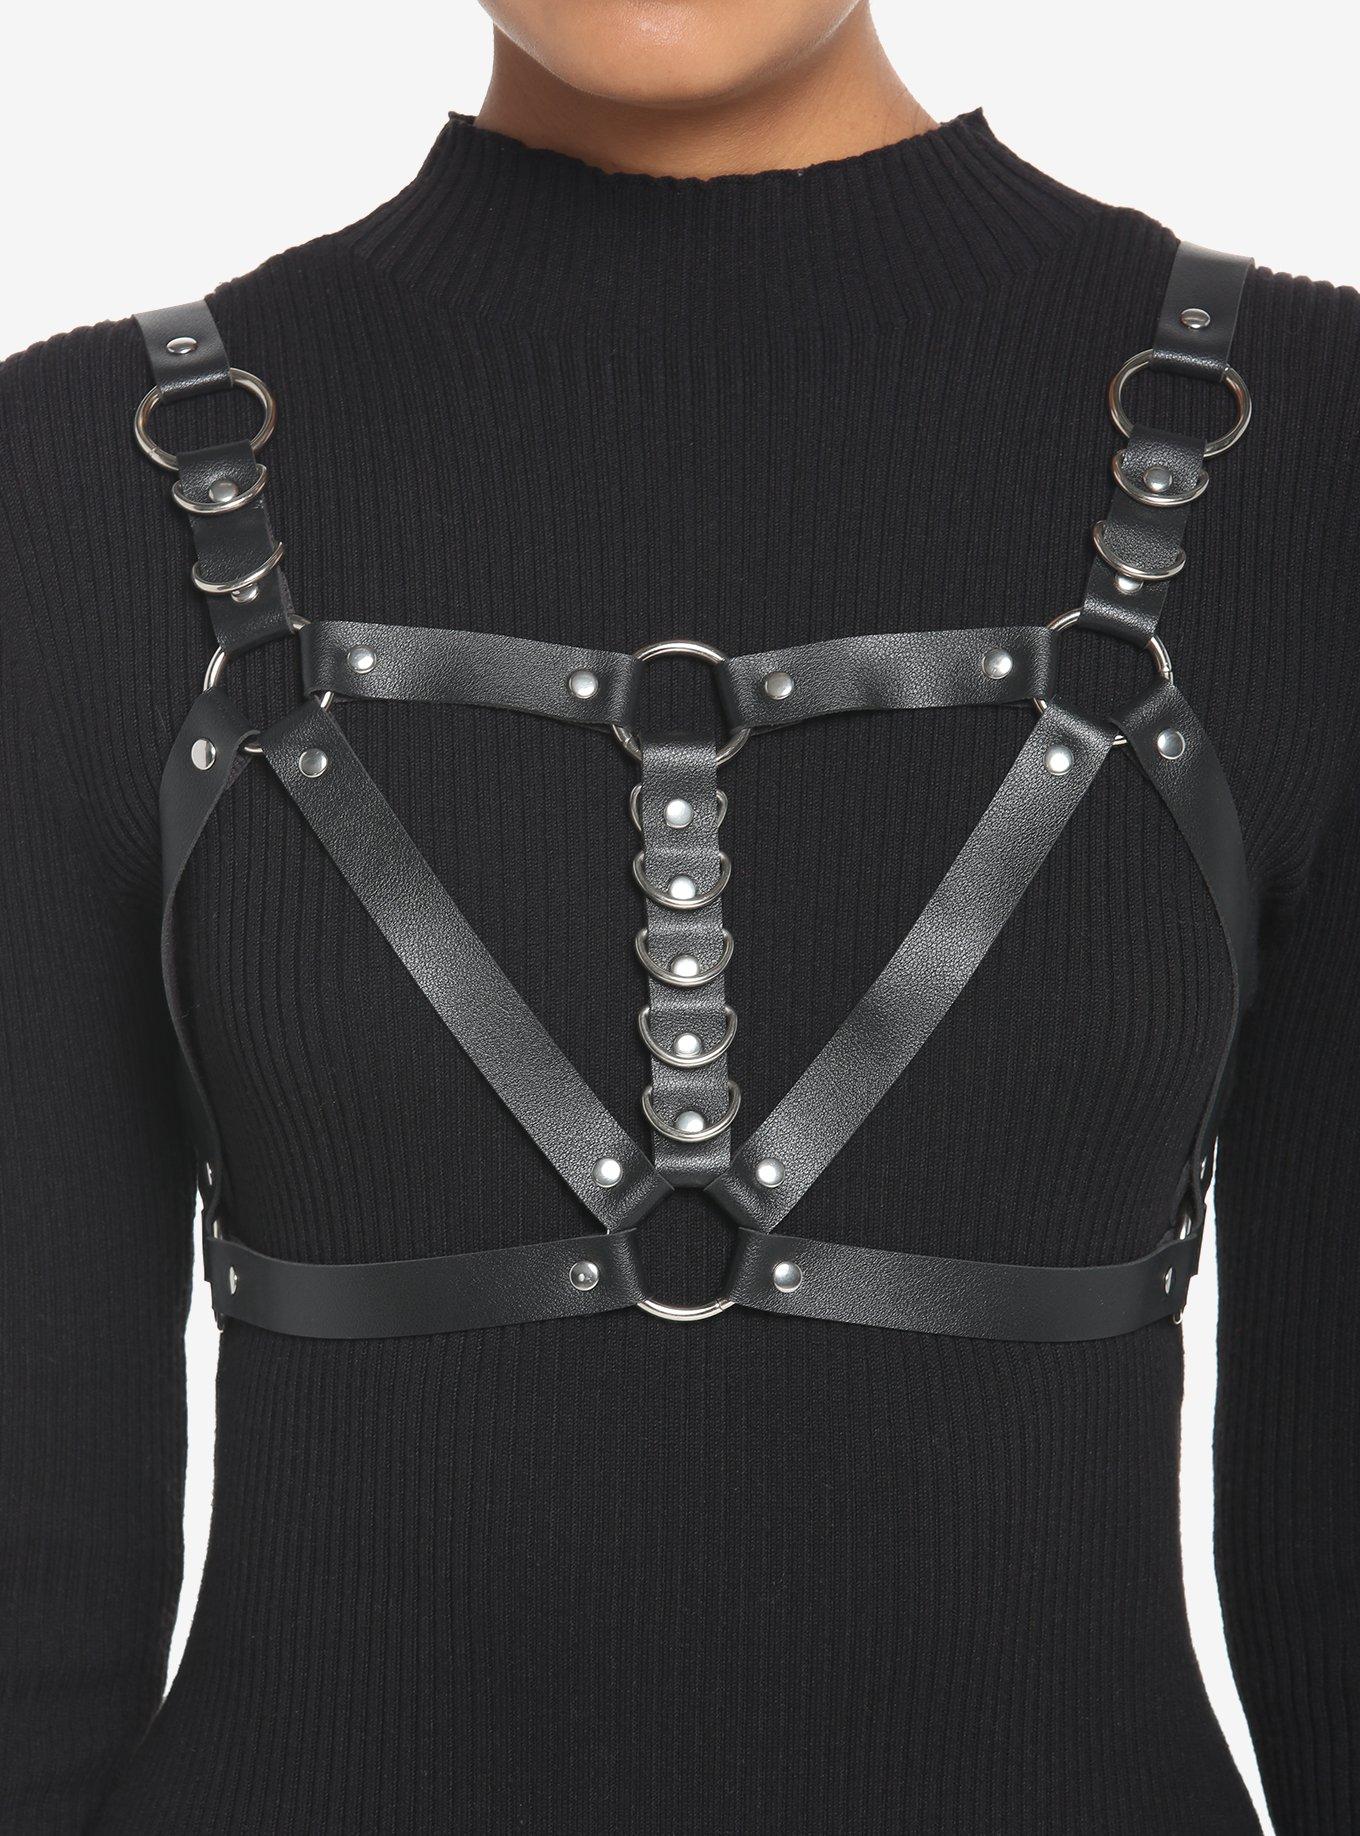 Black D-Ring Bra Harness | Hot Topic